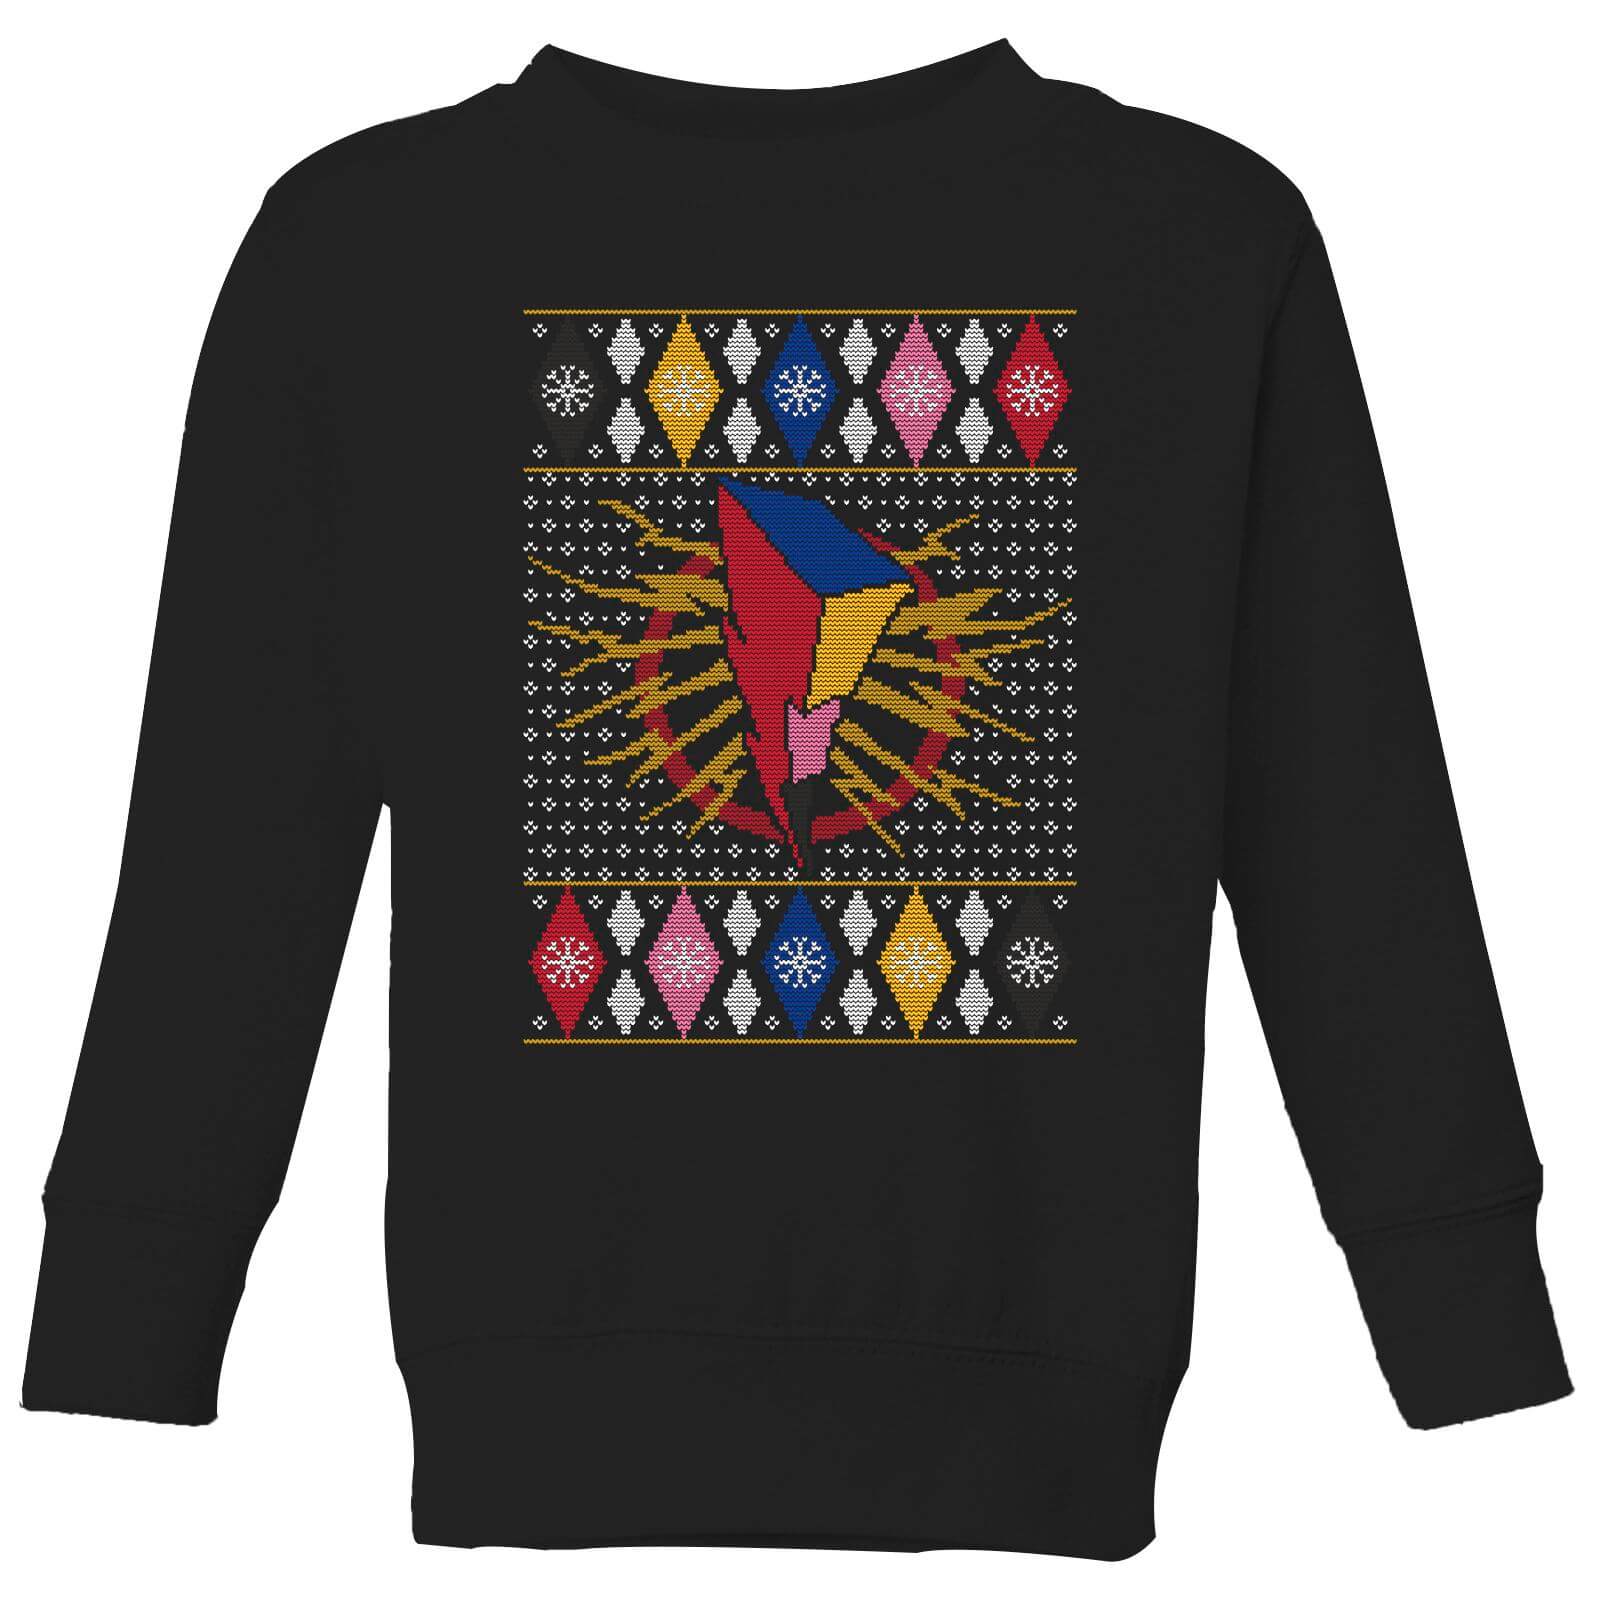 Power Rangers Kids' Christmas Sweatshirt - Black - 3-4 Years